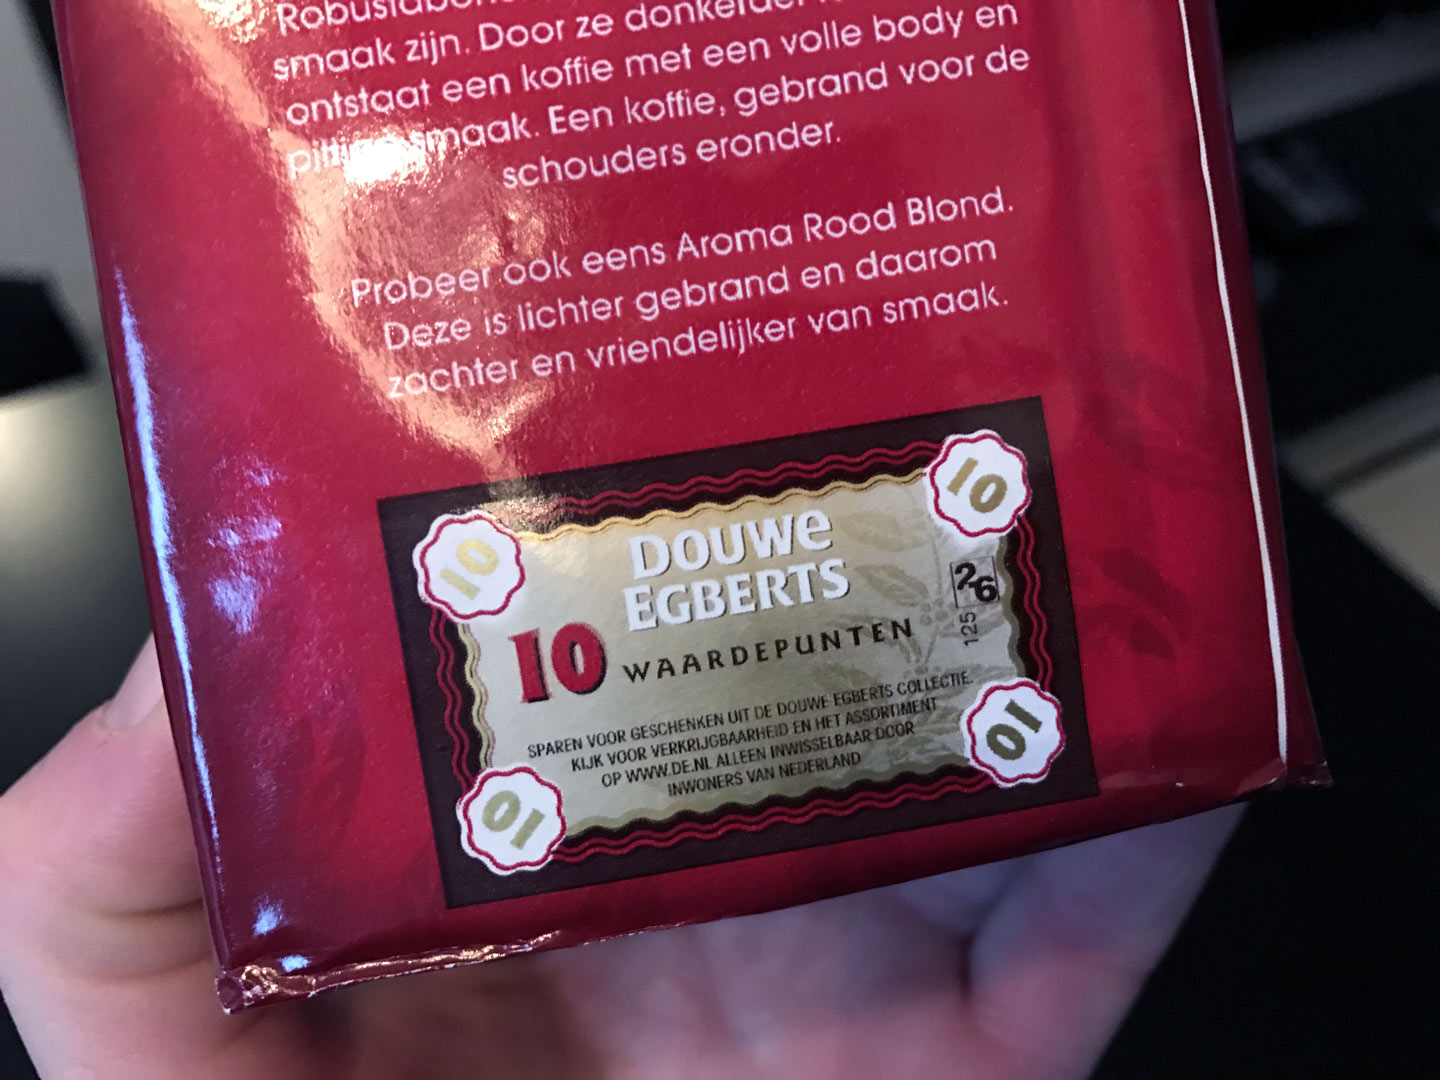 Gerard Unger’s Alverata in use in the Dutch brand Douwe Egberts